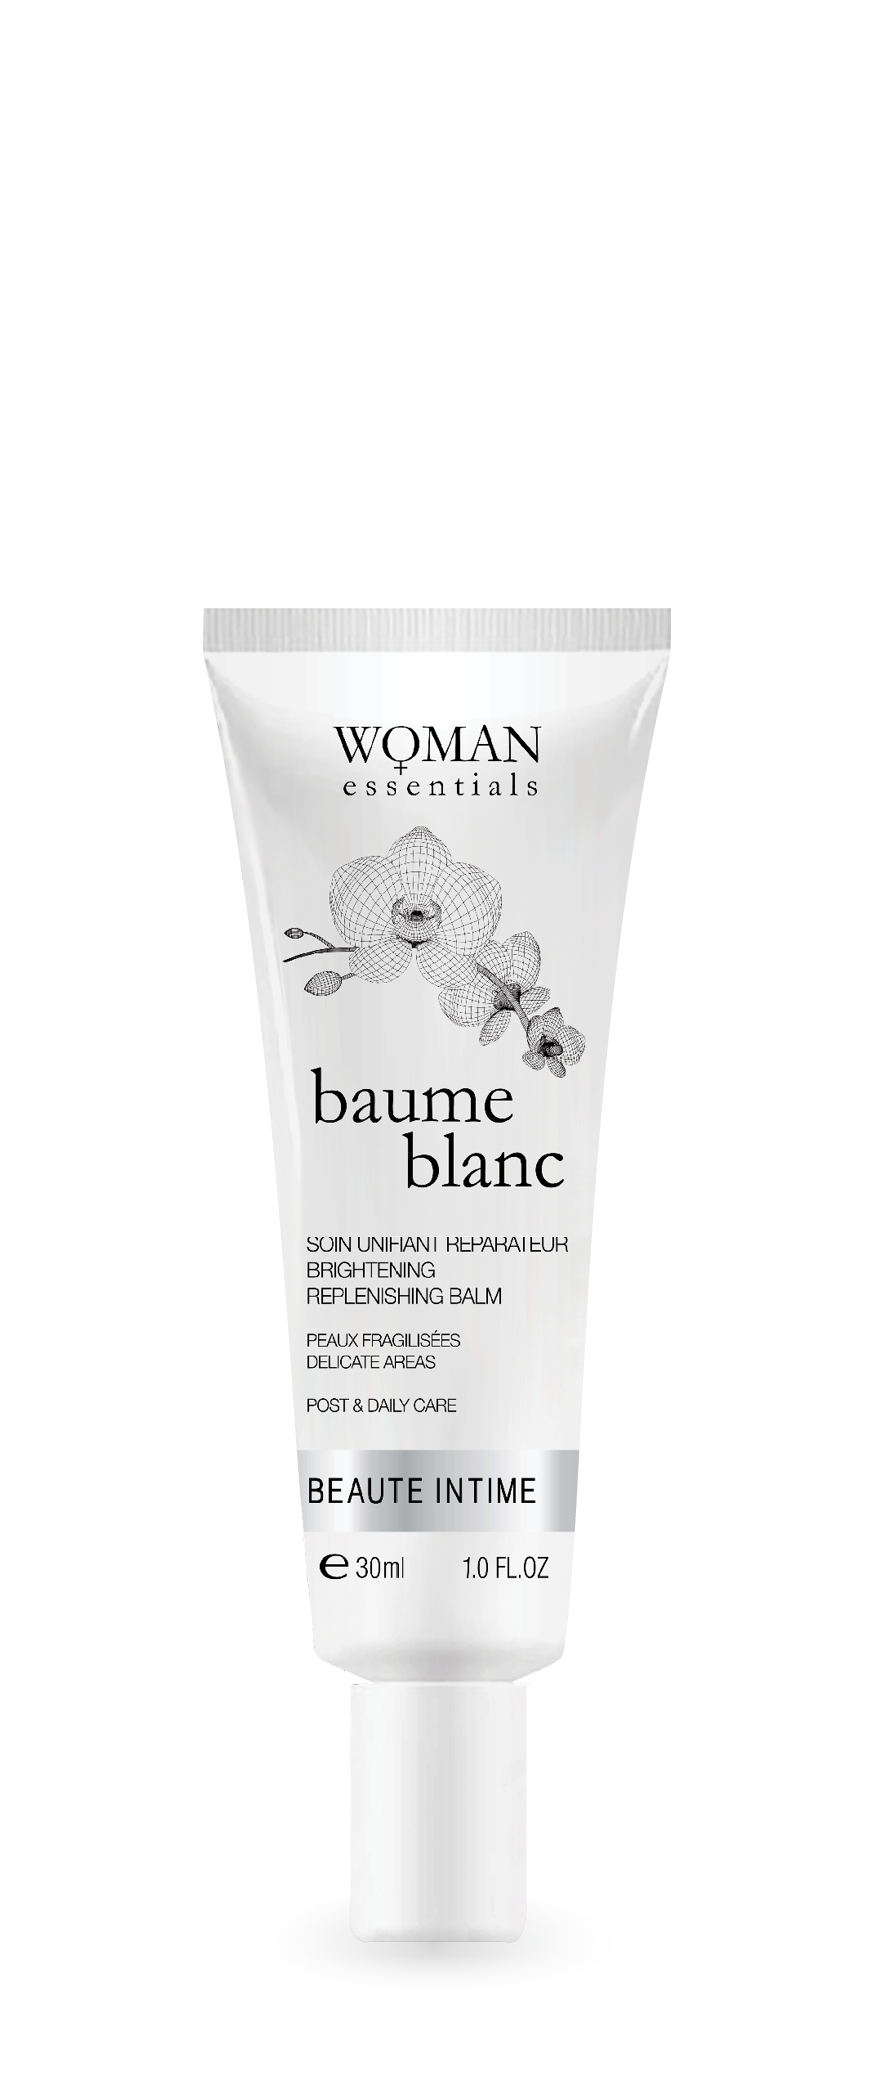 baume blanc - Woman Essentials